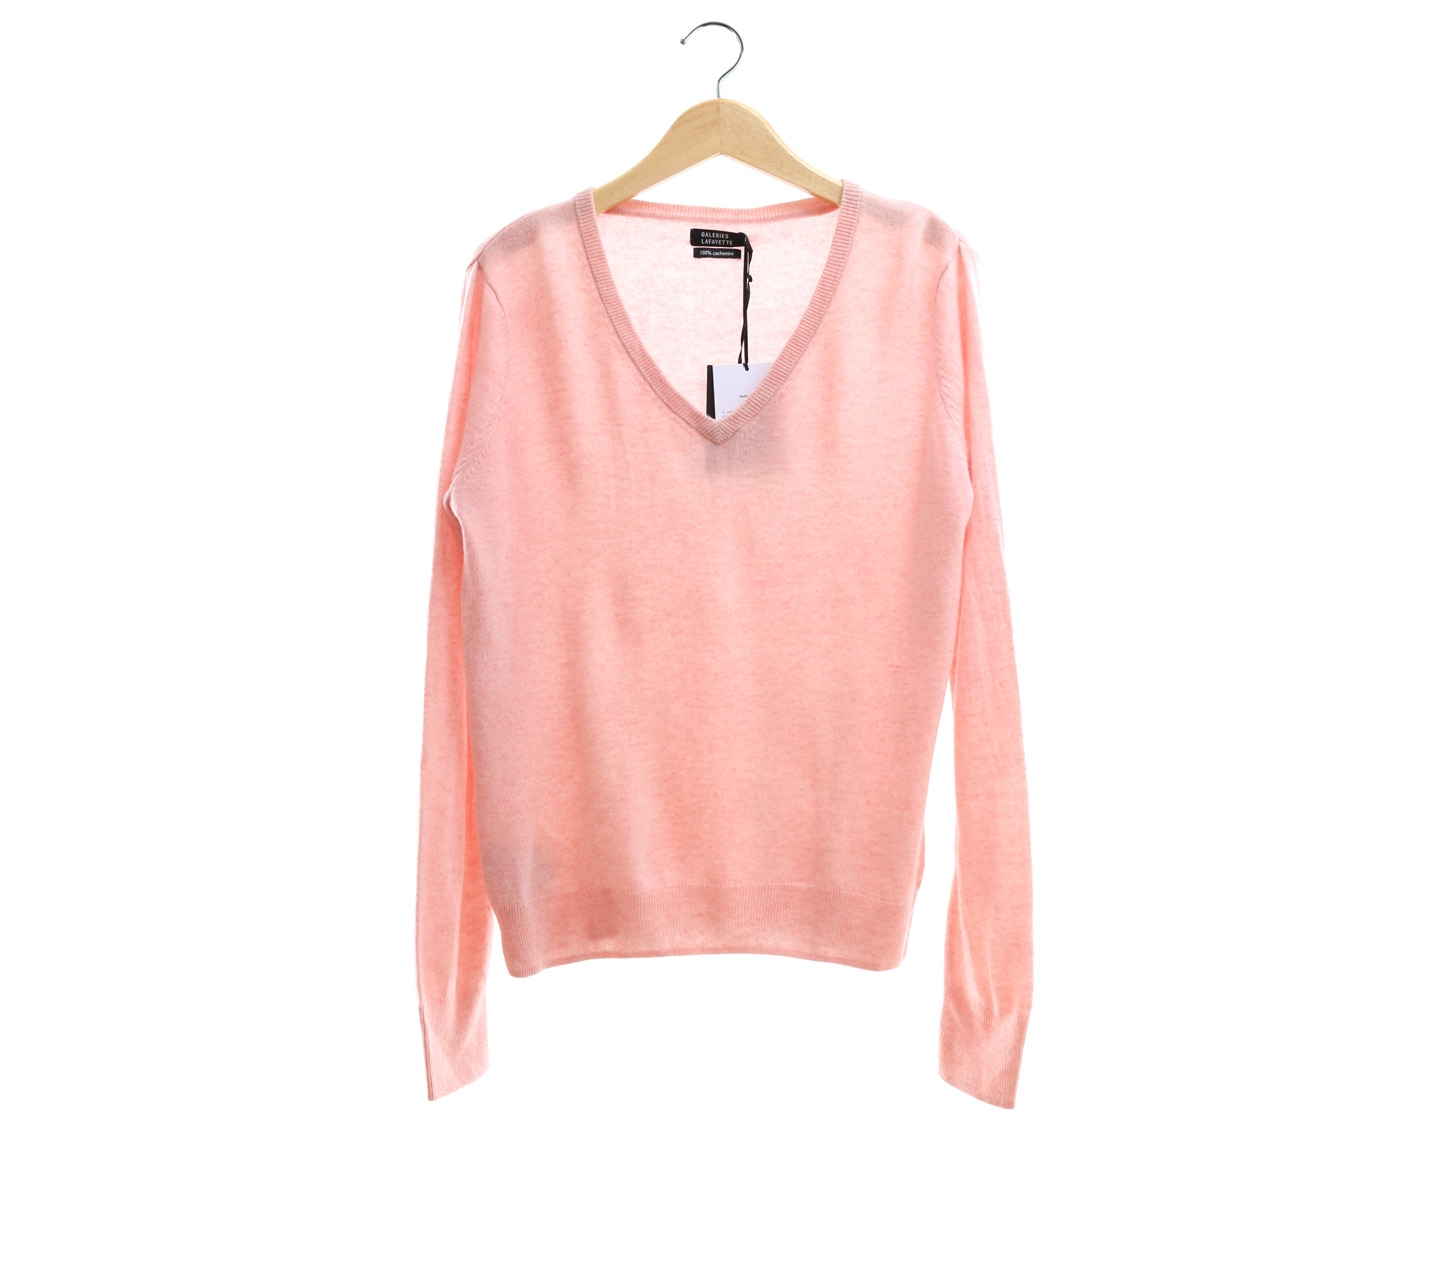 Galeries lafayette Pink Sweater